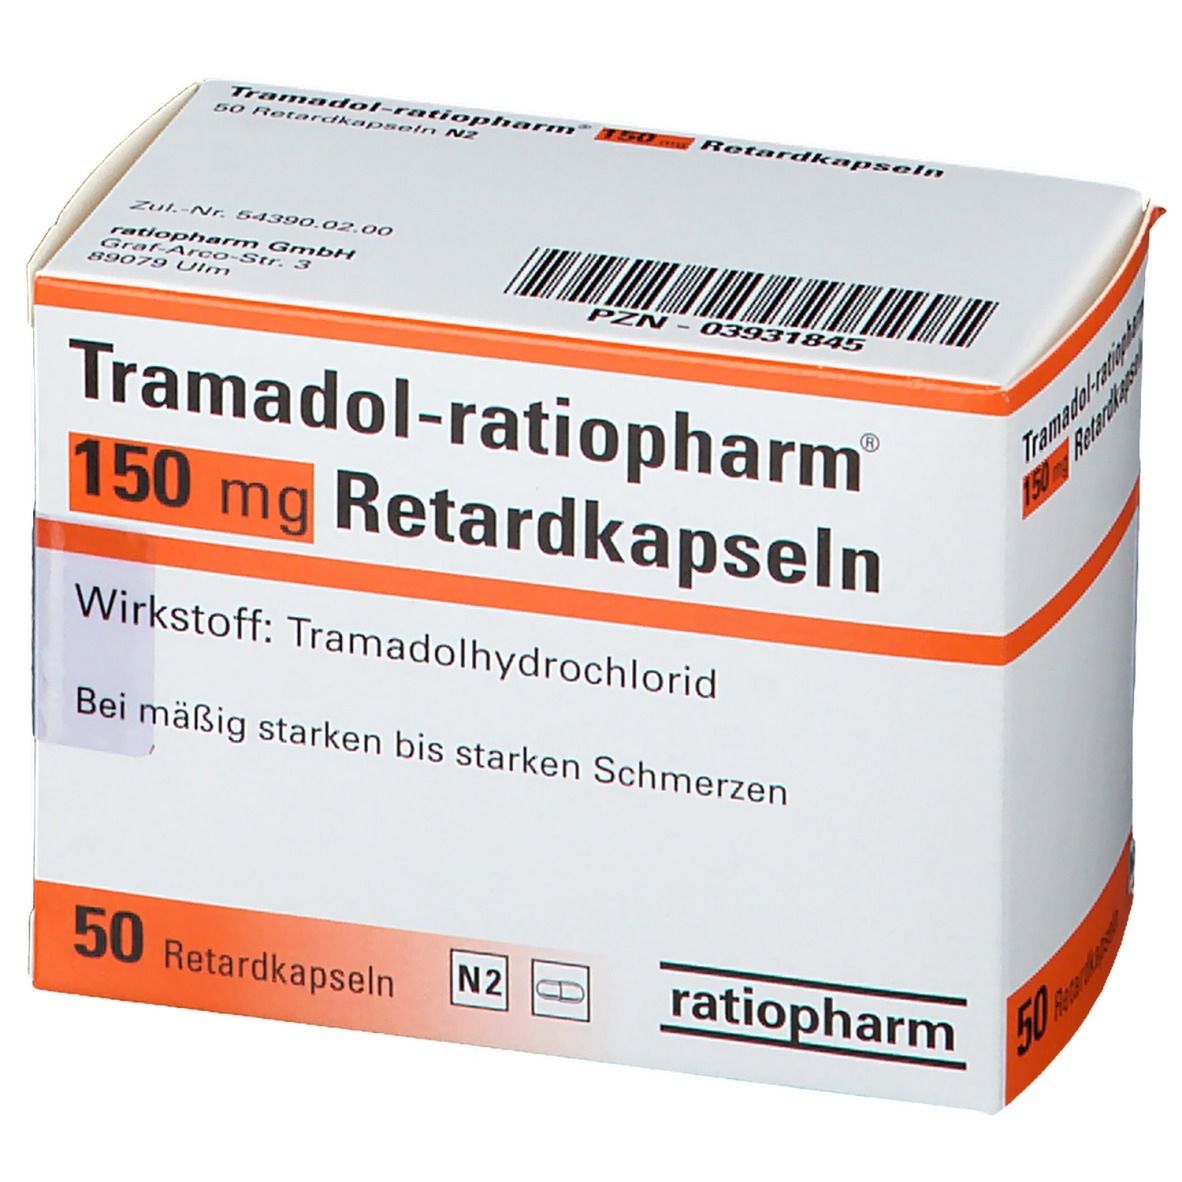 Tramadol-ratiopharm® 150 mg